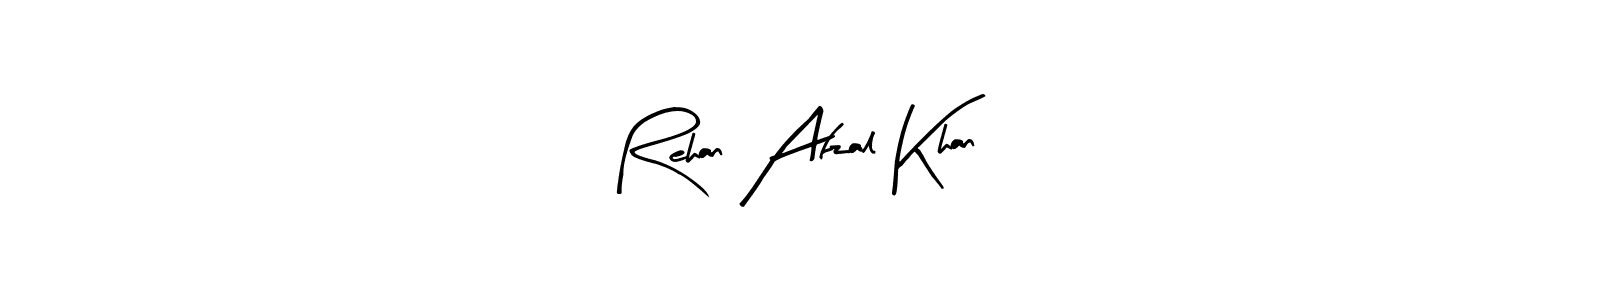 80+ Rehan Afzal Khan Name Signature Style Ideas | Ultimate Electronic ...